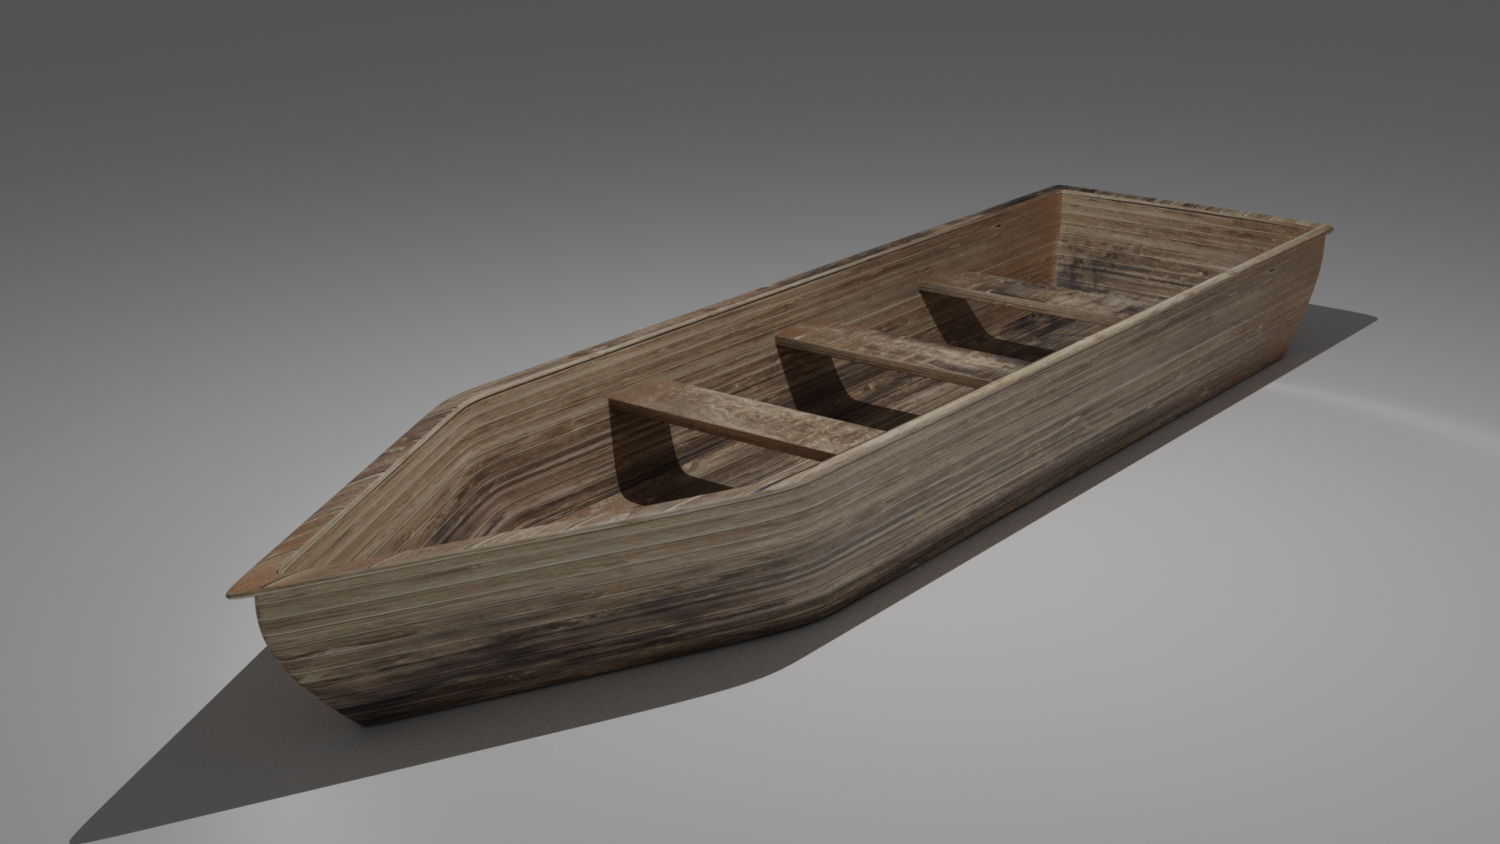 Simple Model Wooden Ships